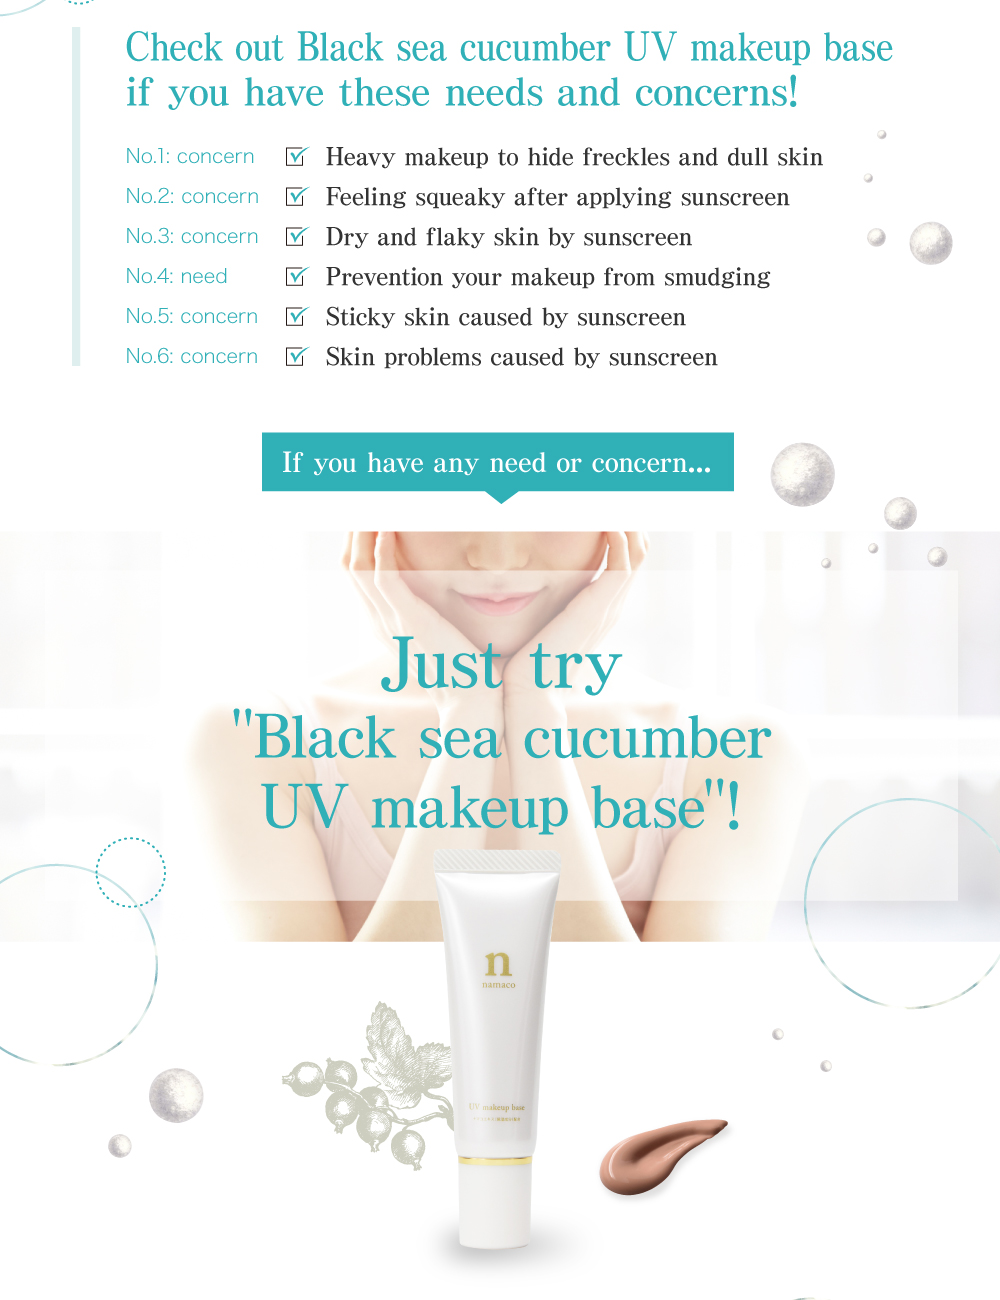 Just try Black sea cucumber UV makeup base!